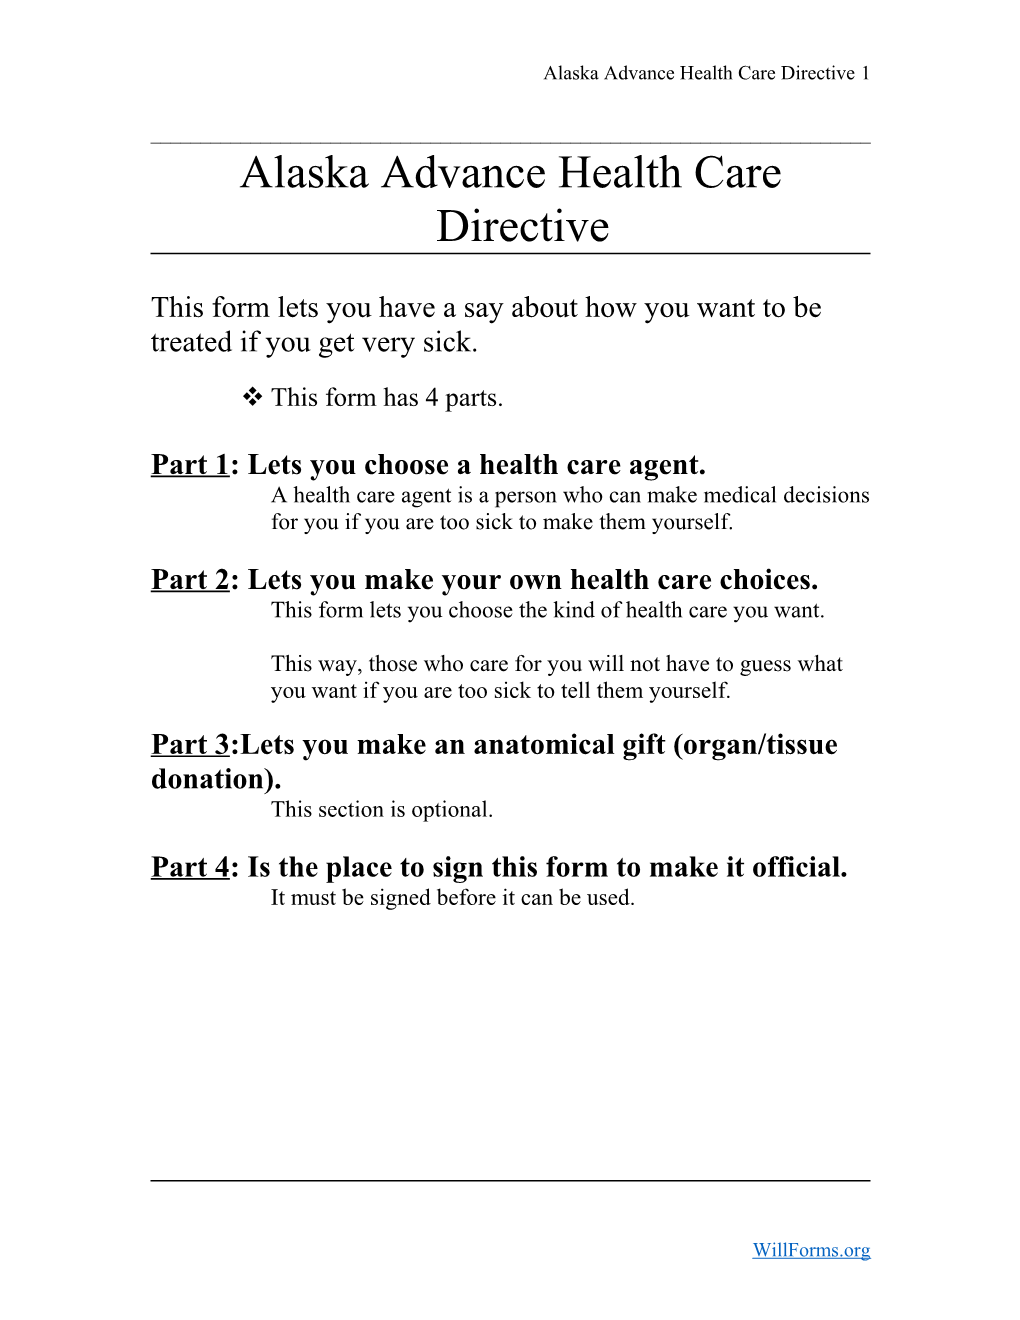 Alaska Advance Directive Form